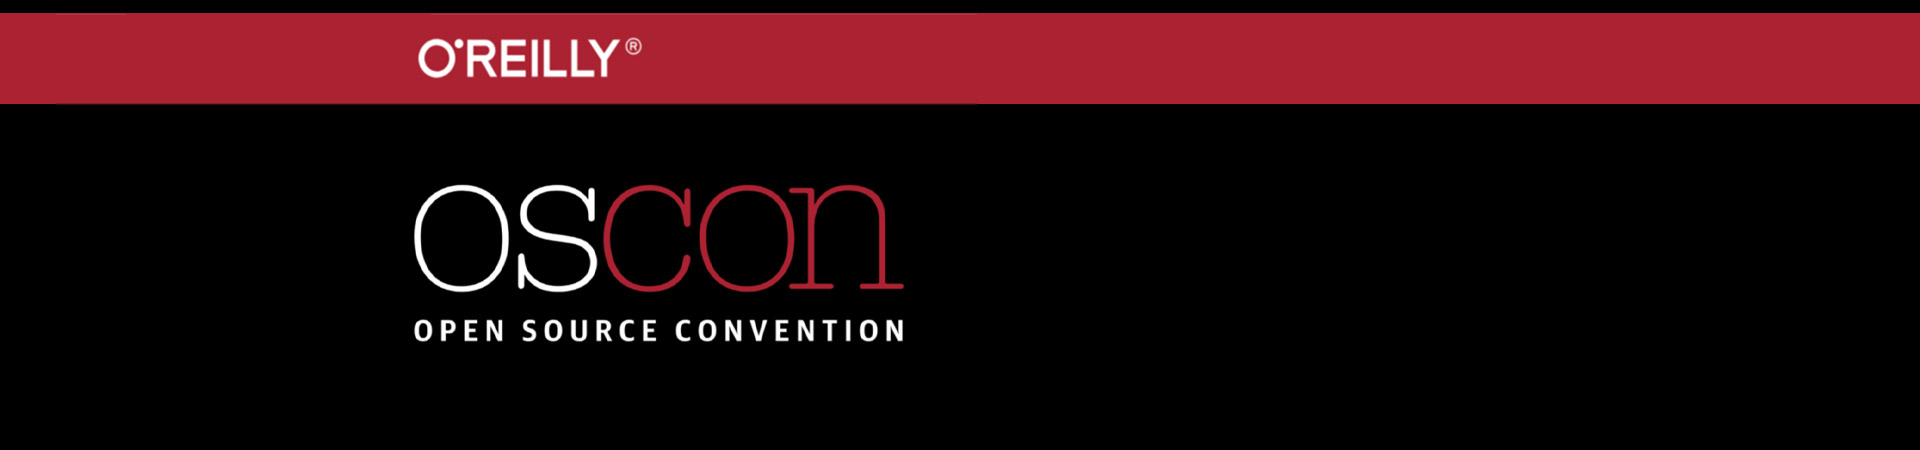 O'Reilly oscon (Open Source Convention) Banner Image